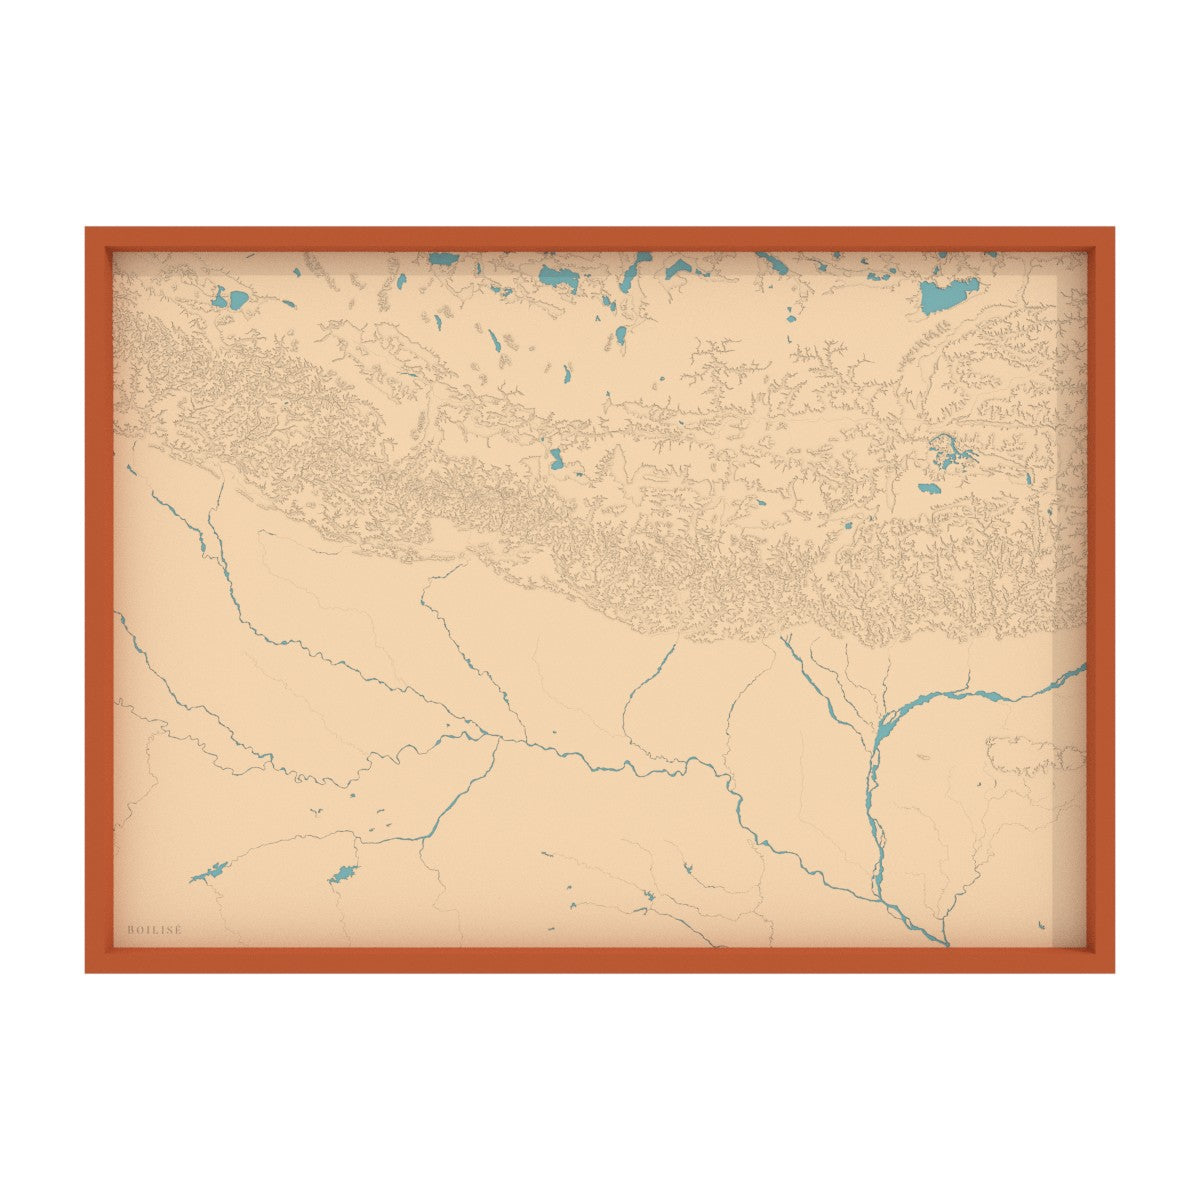 Map of Nepal and Bhutan